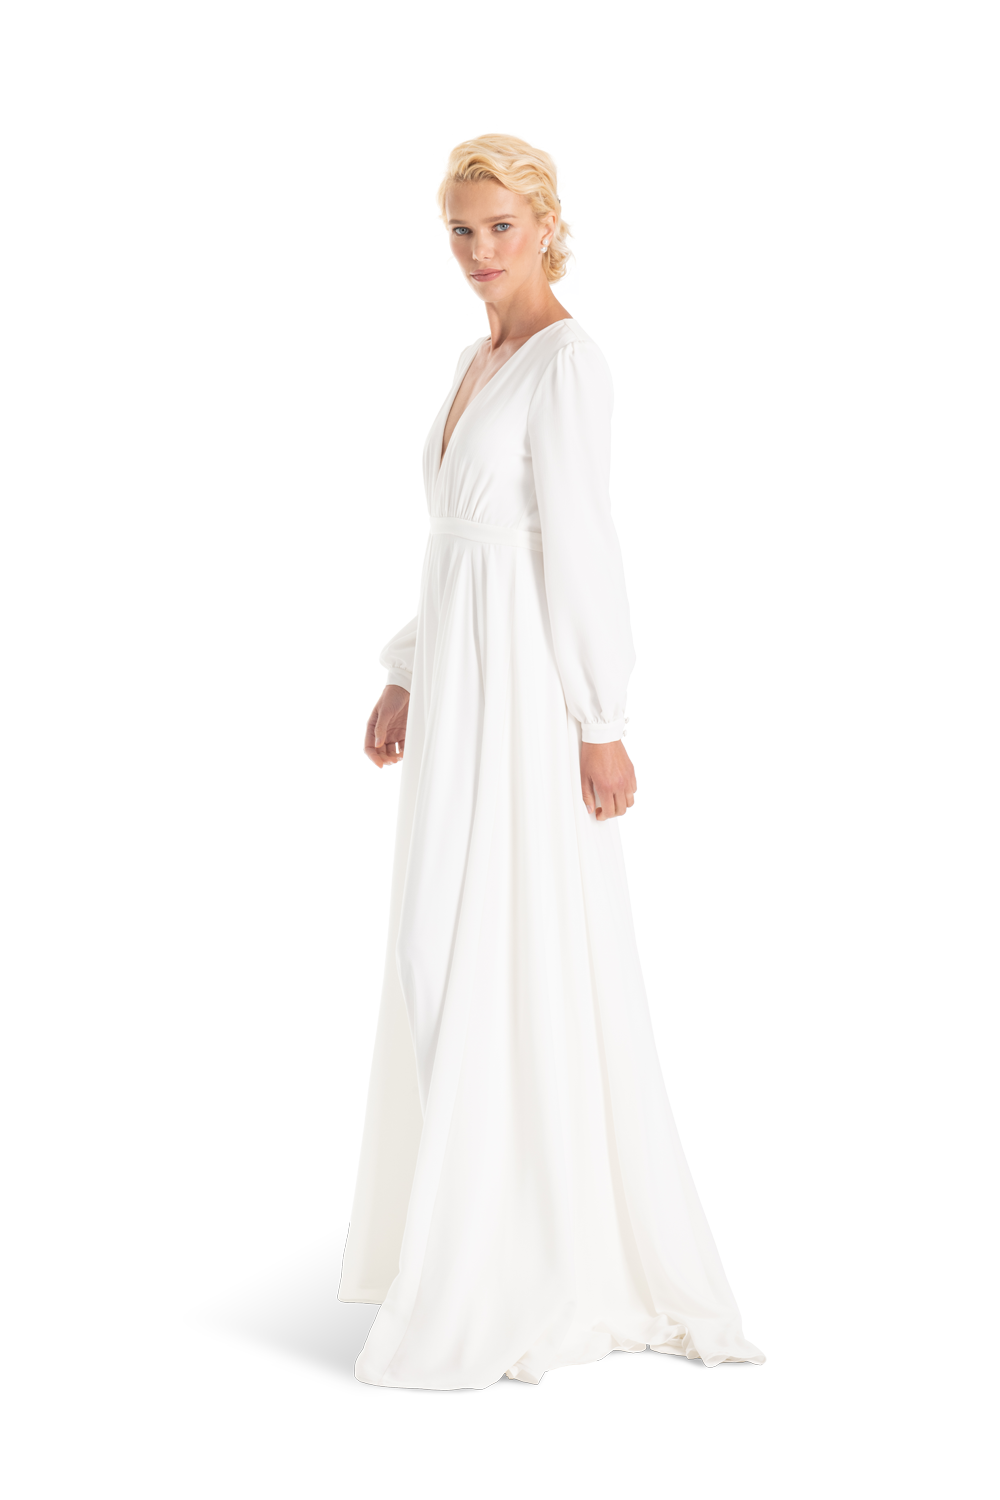 GC#911949 - Joanna August Floyd Dress in Size 8